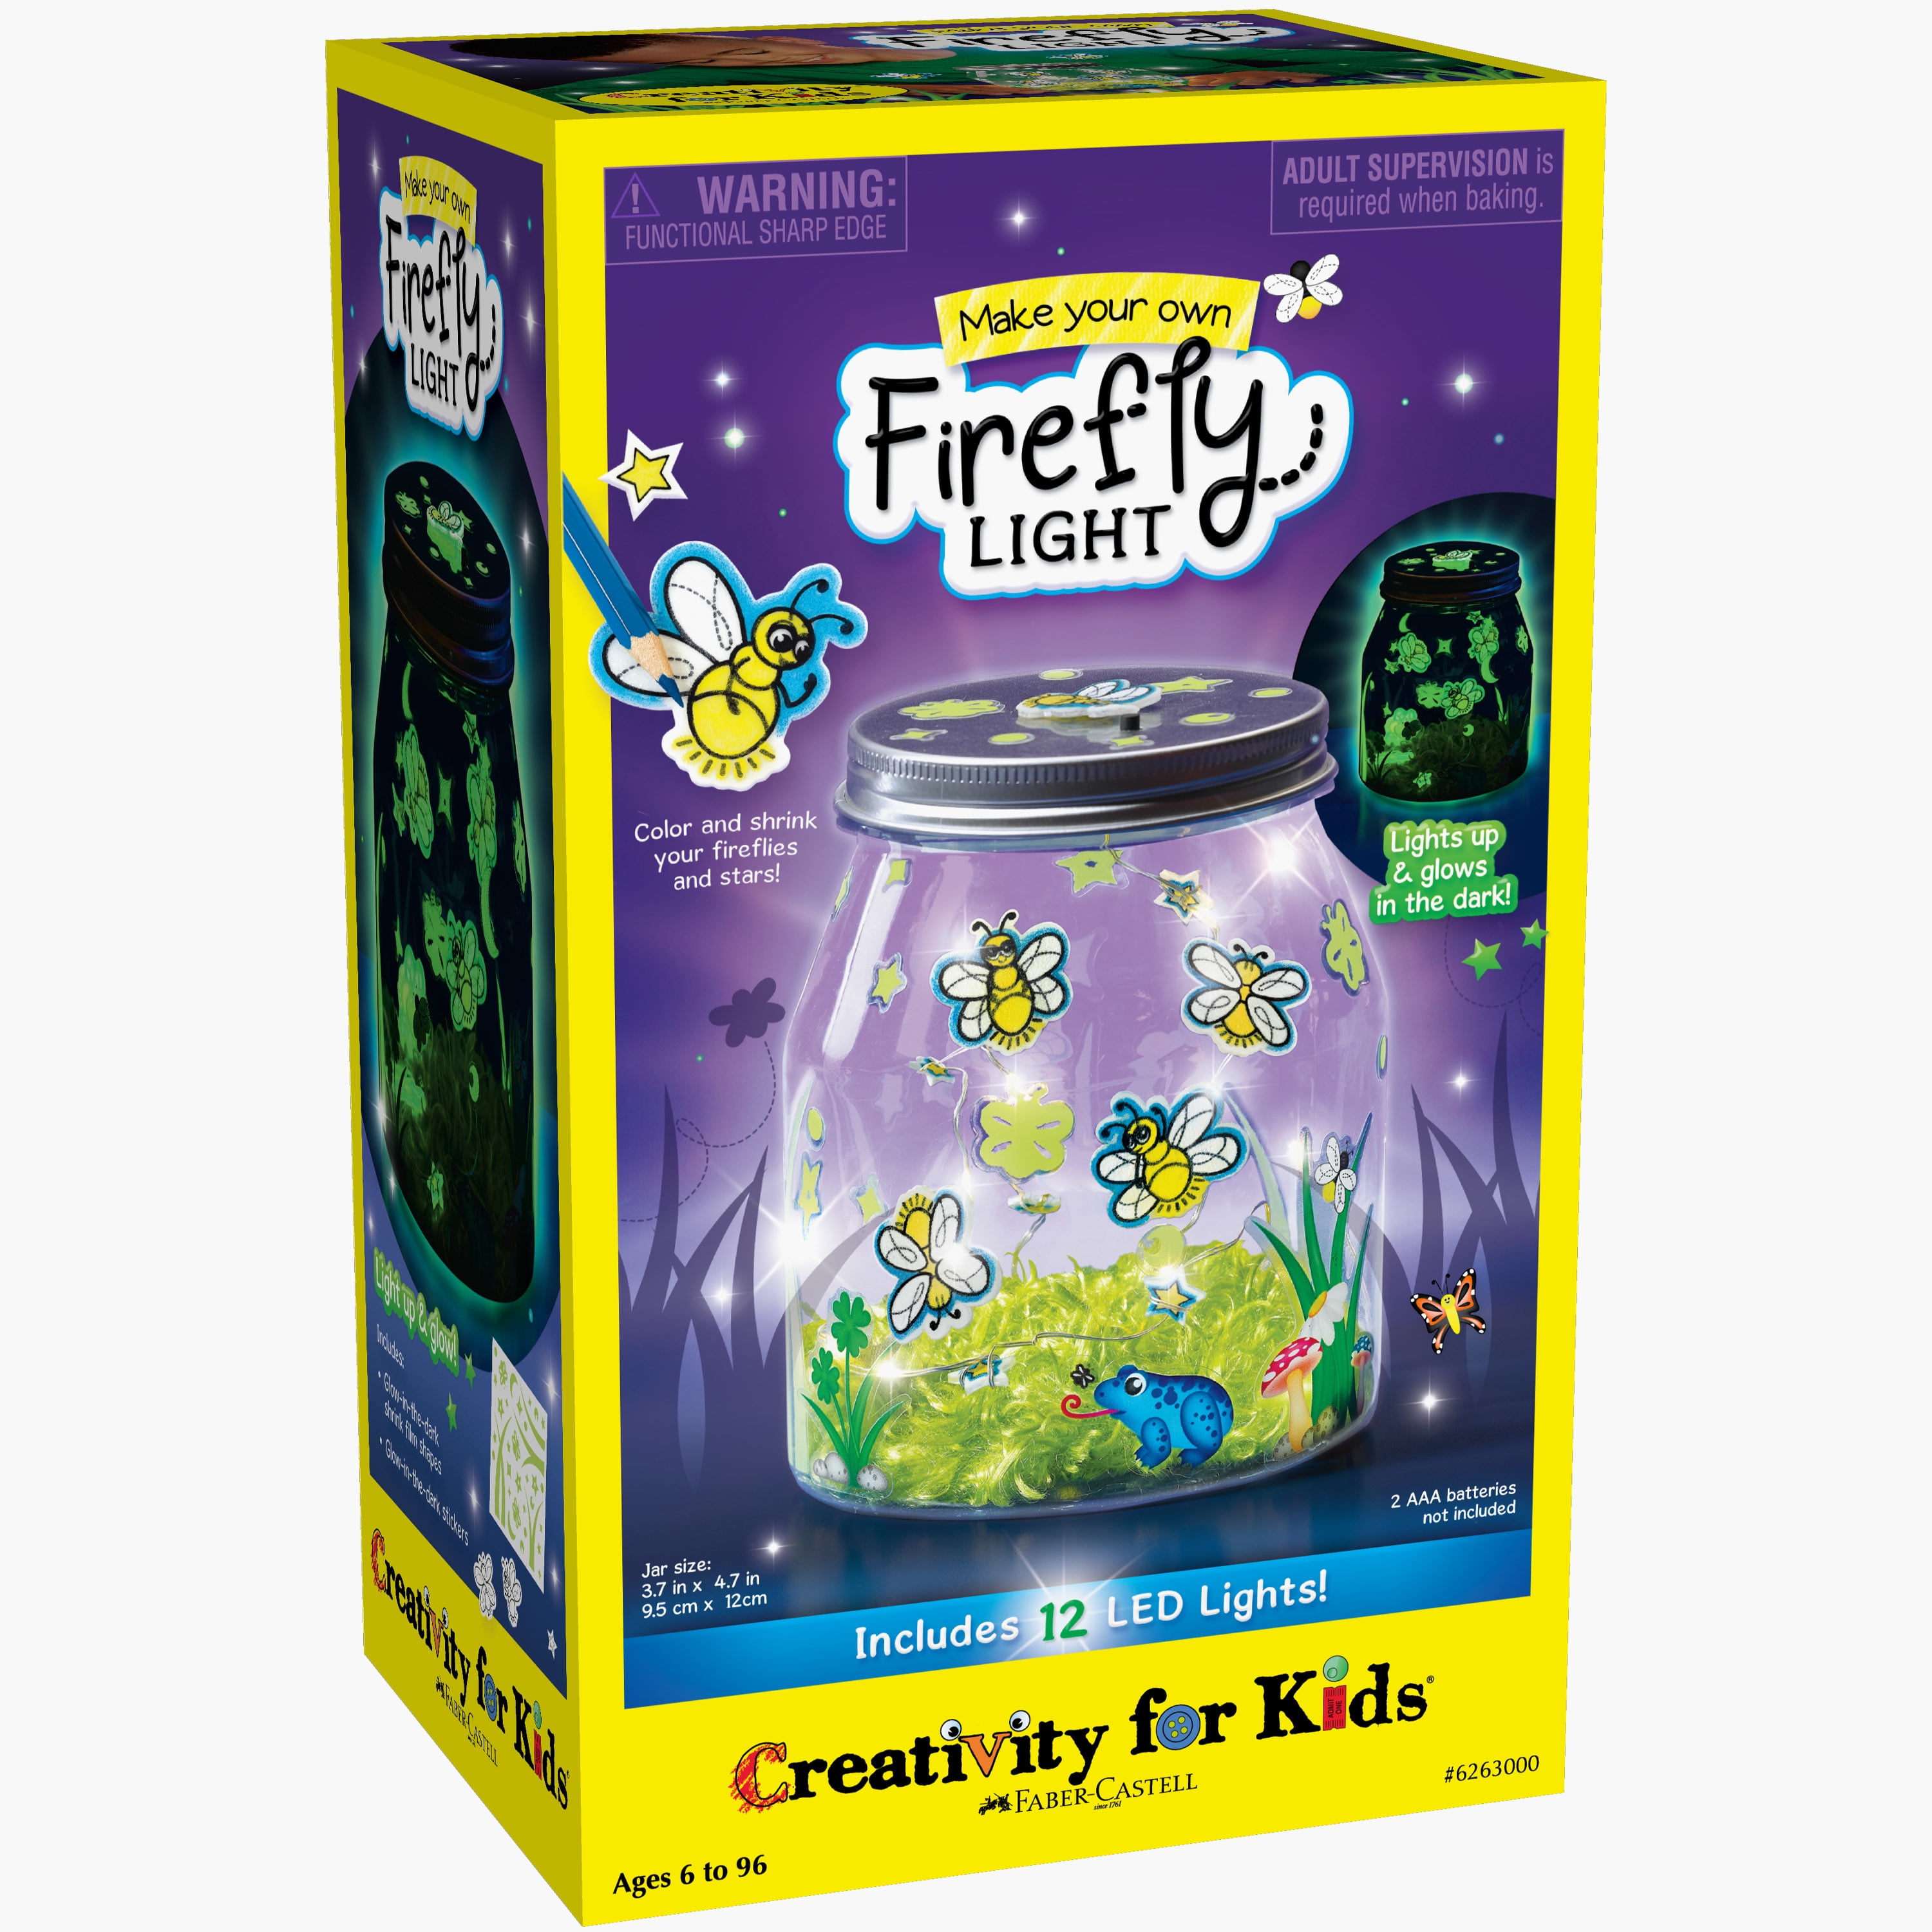 16 Useful Kitchen Gadgets  creative gift ideas & news at catching fireflies